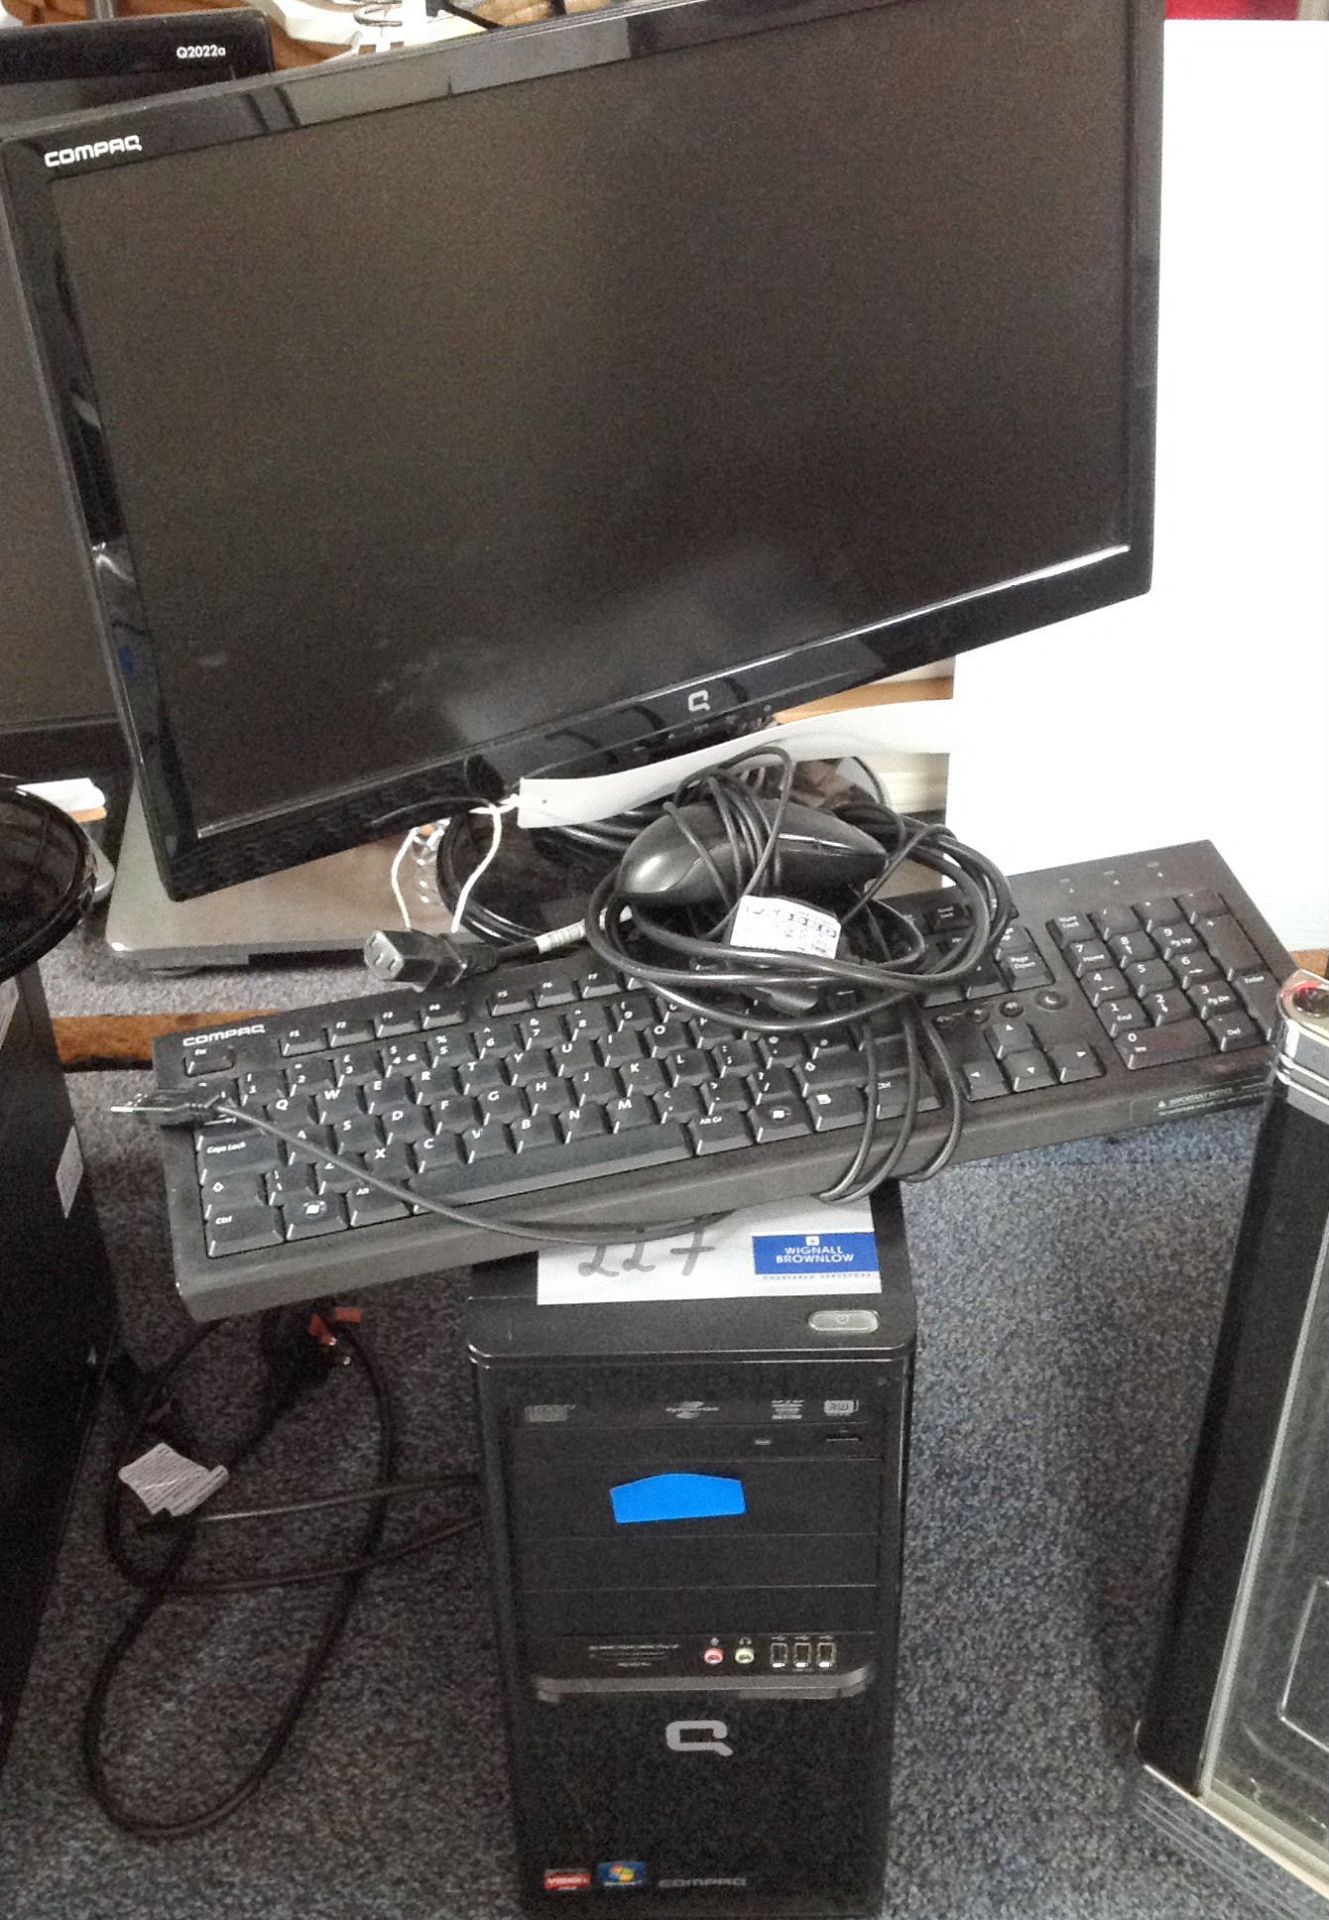 A Compaq SG3 Personal Computer with Flatscreen Monitor and Keyboard.